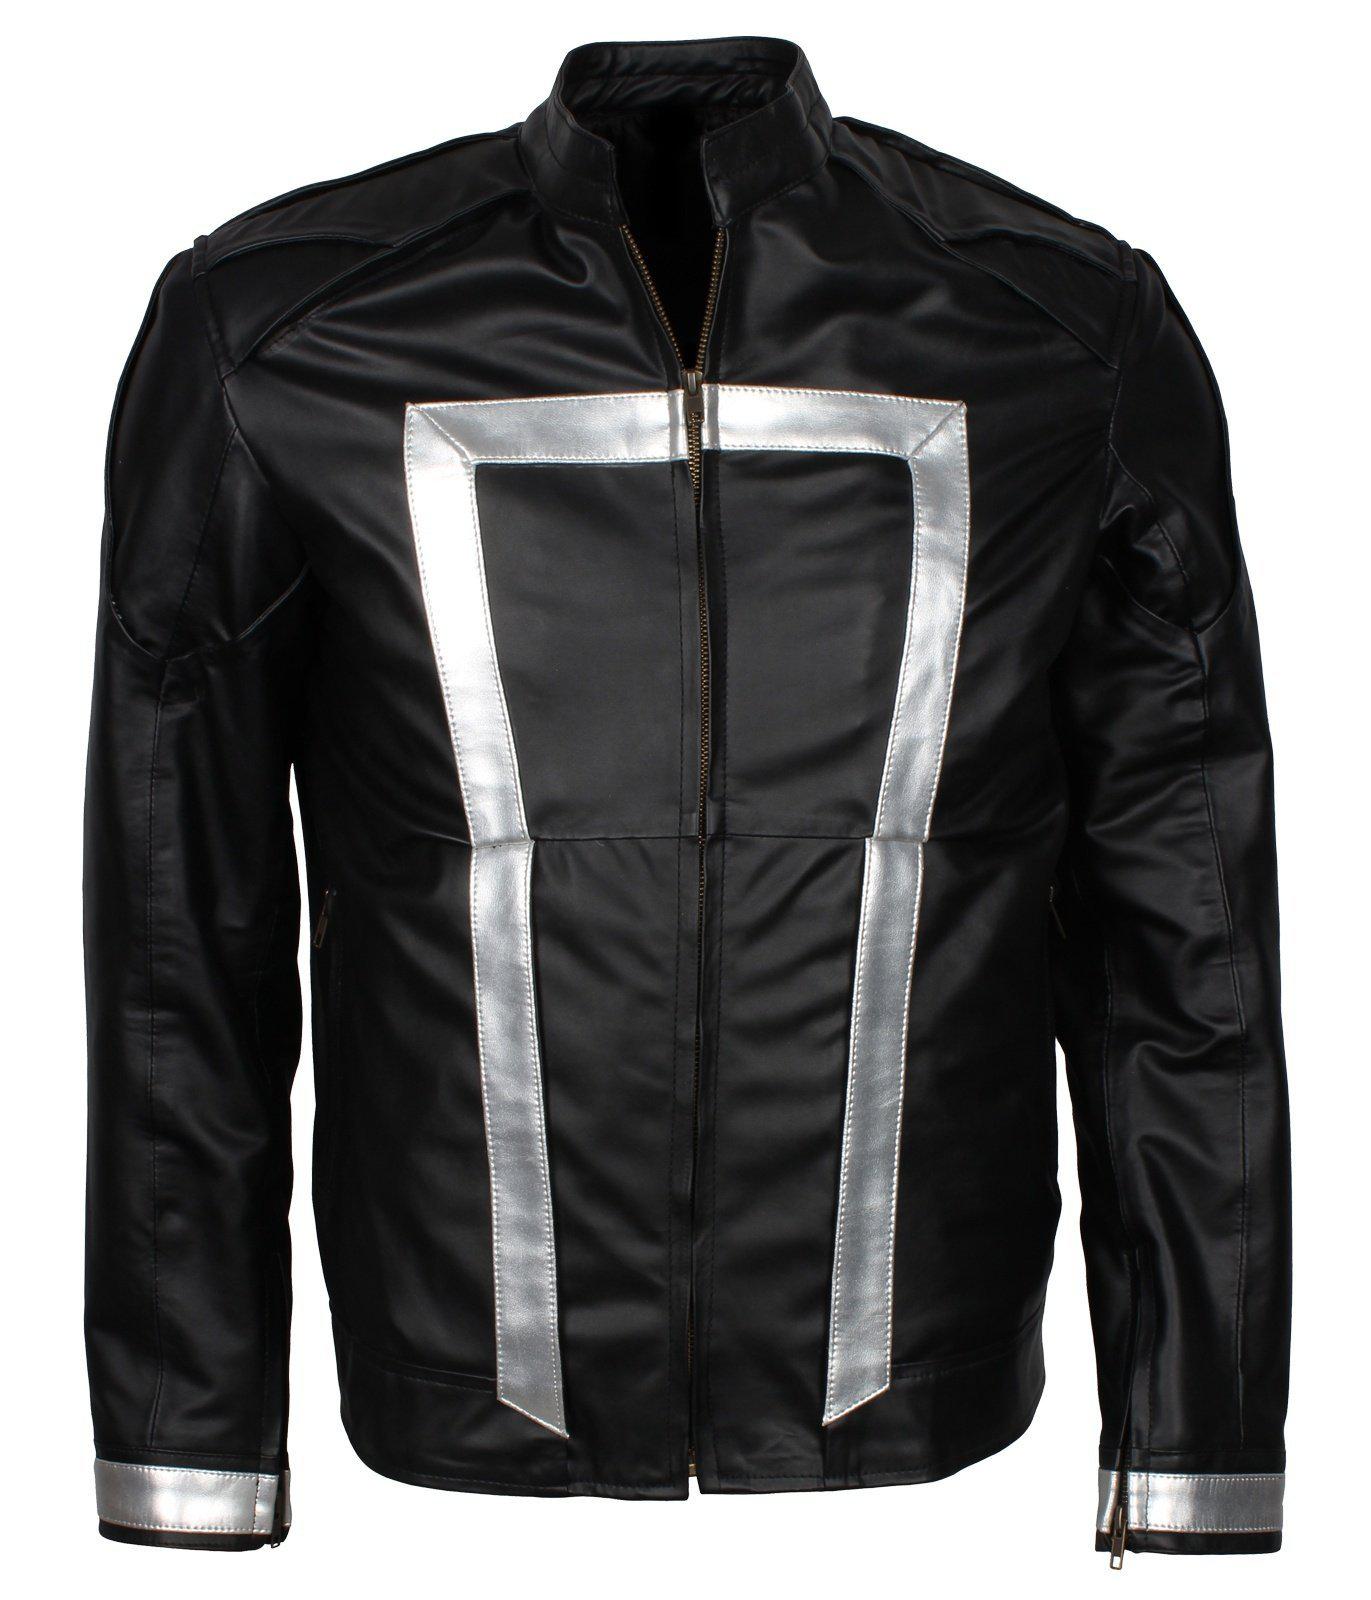 ghost rider jacket